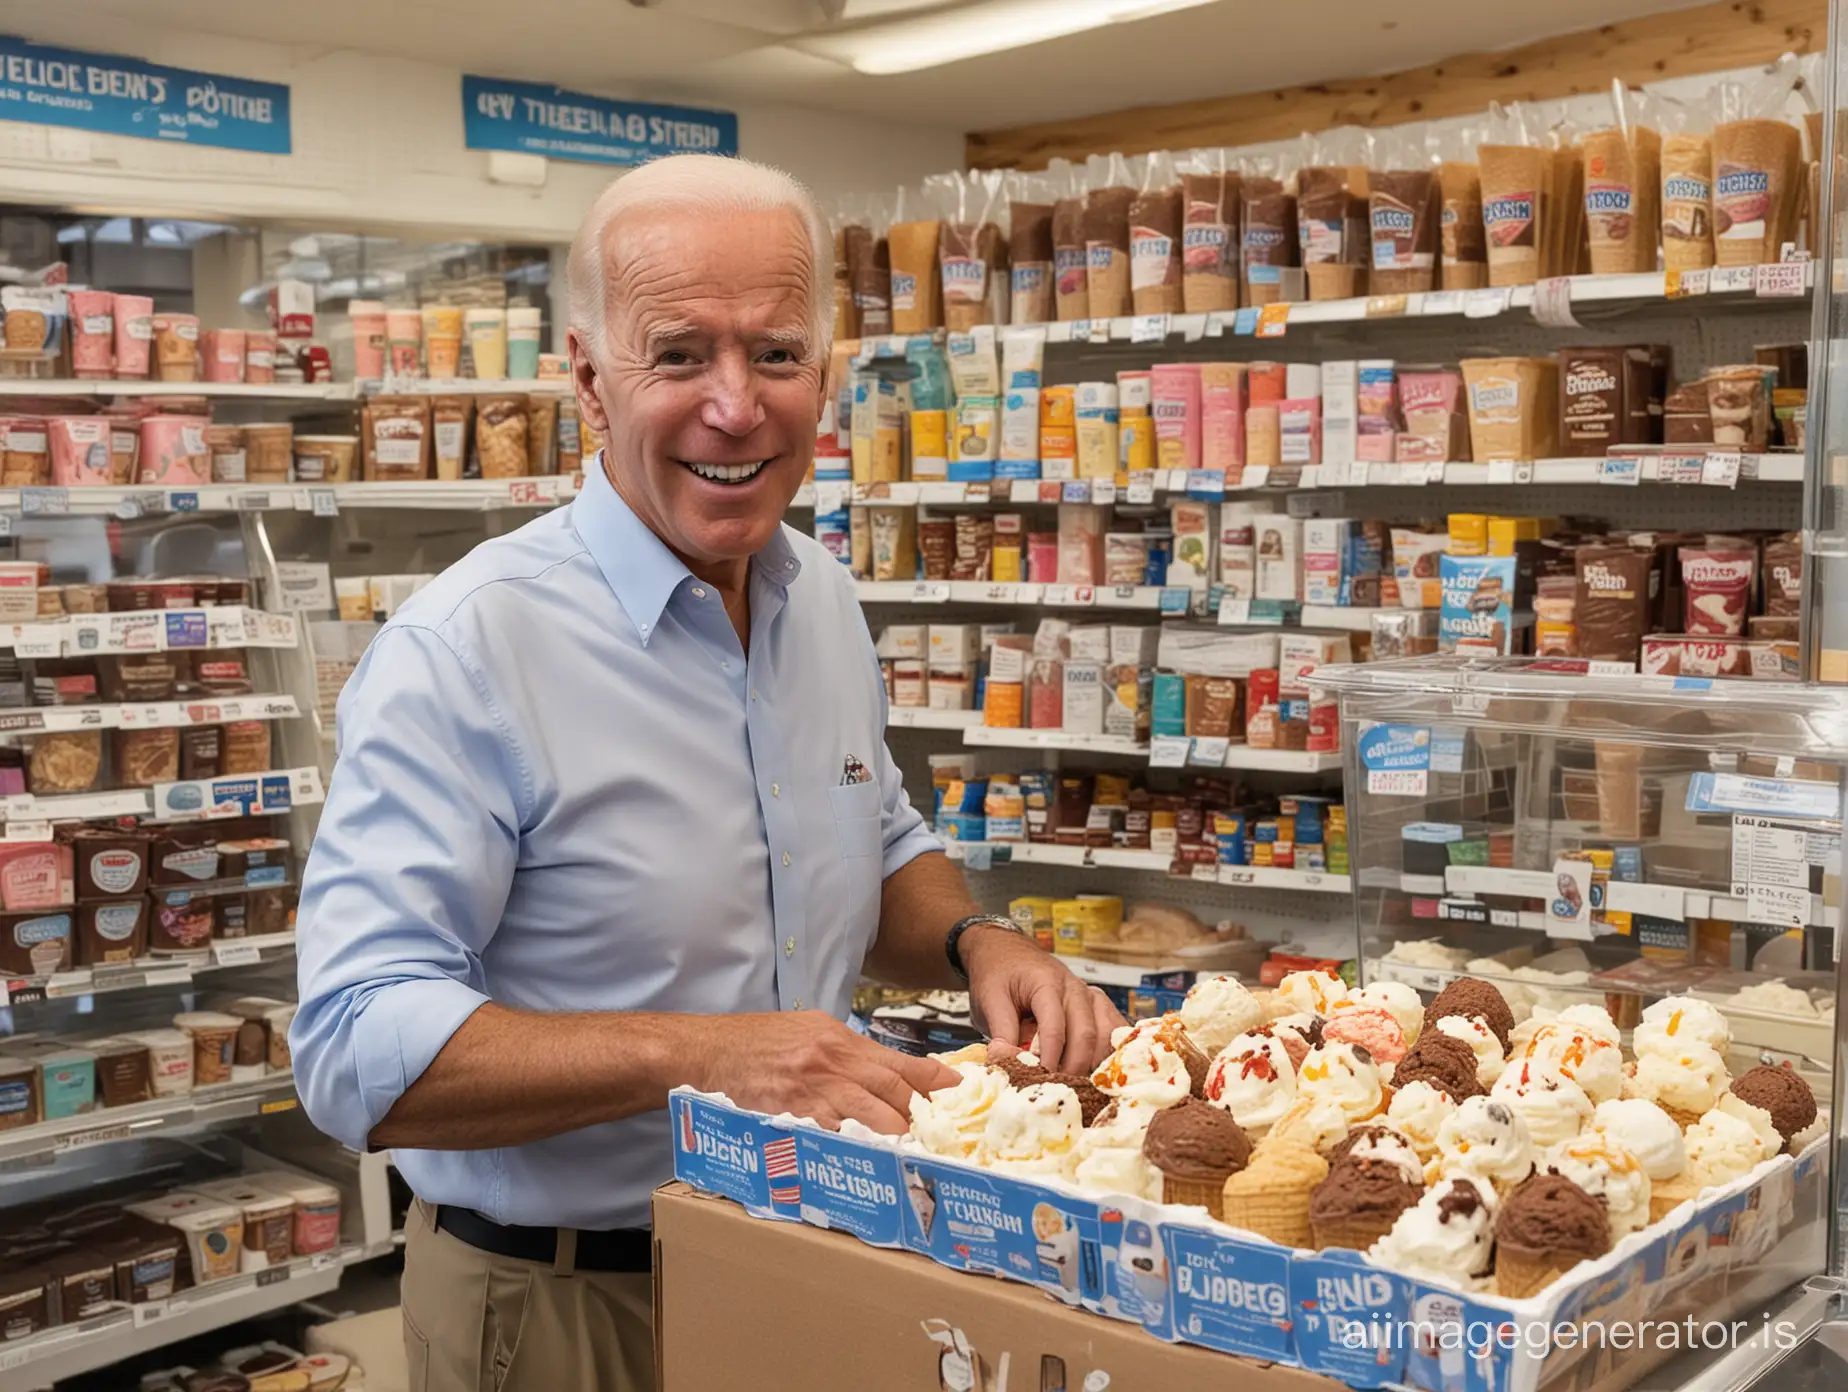 Joe Biden sells Ice Cream in a Shop